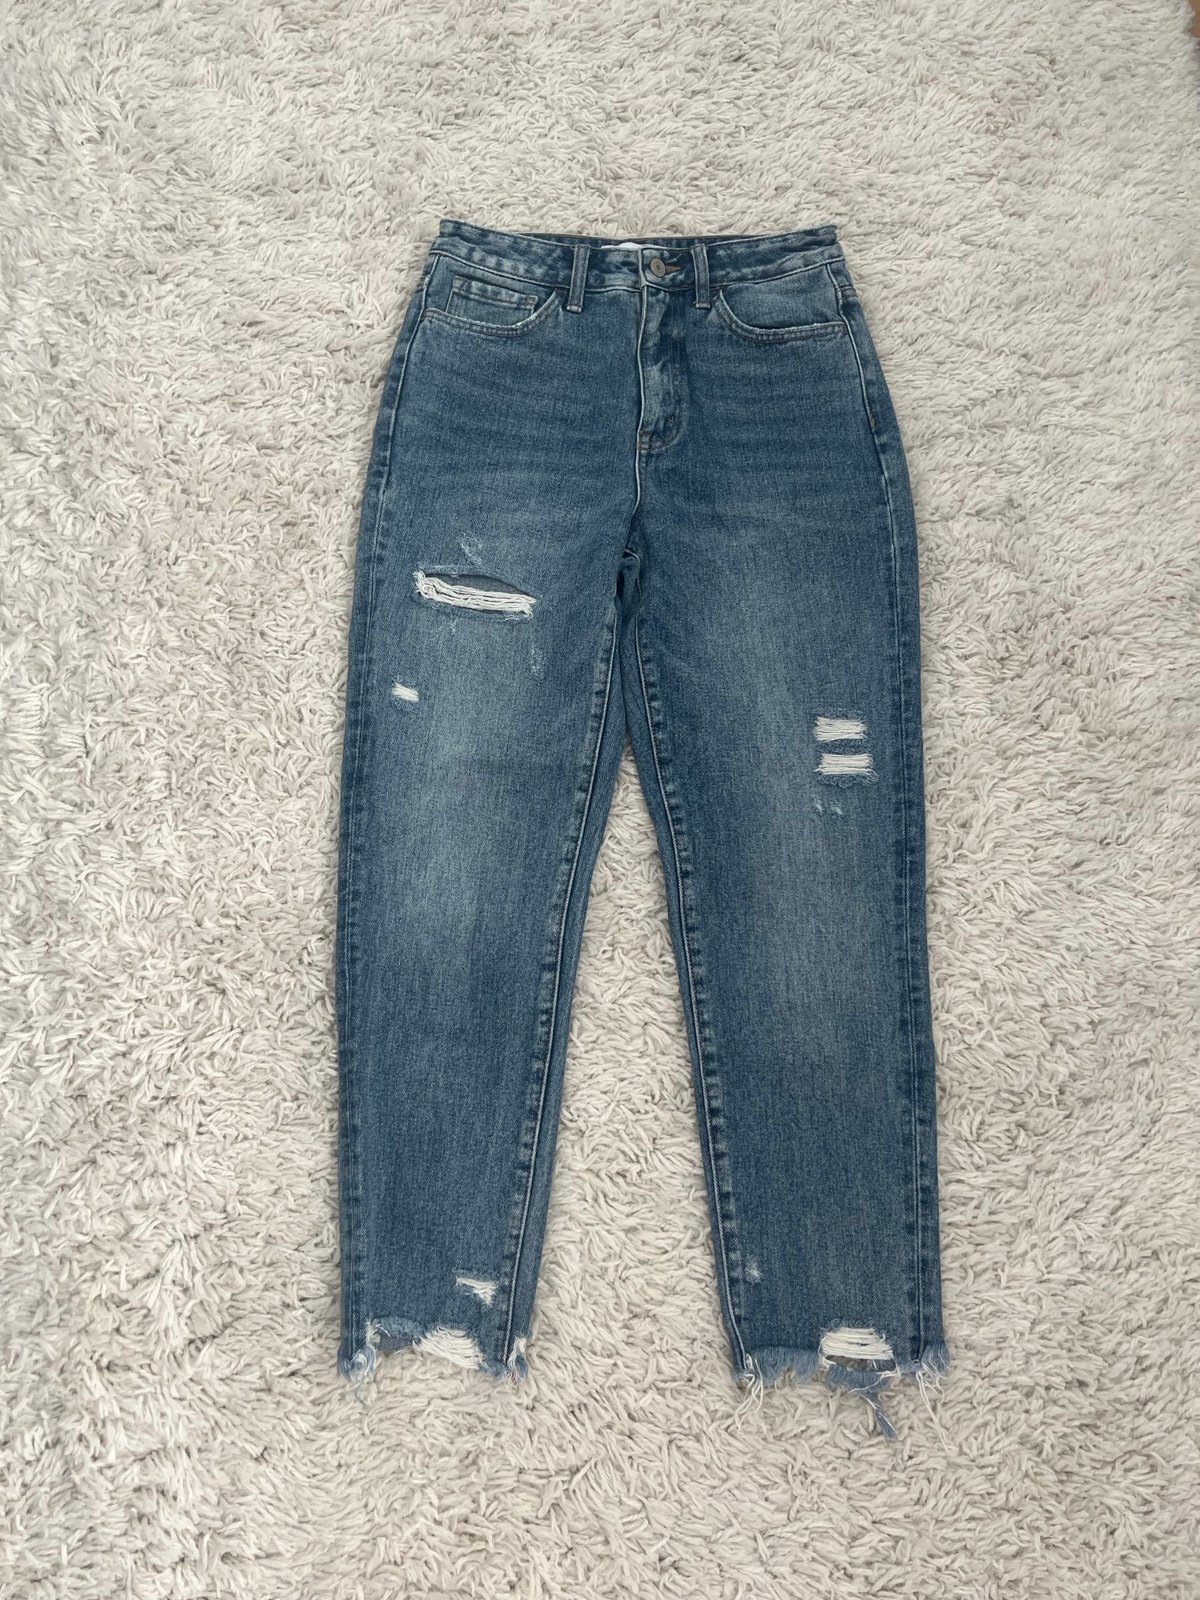 Latest  Straight leg jeans size 26 LypT1NNP5 best sale